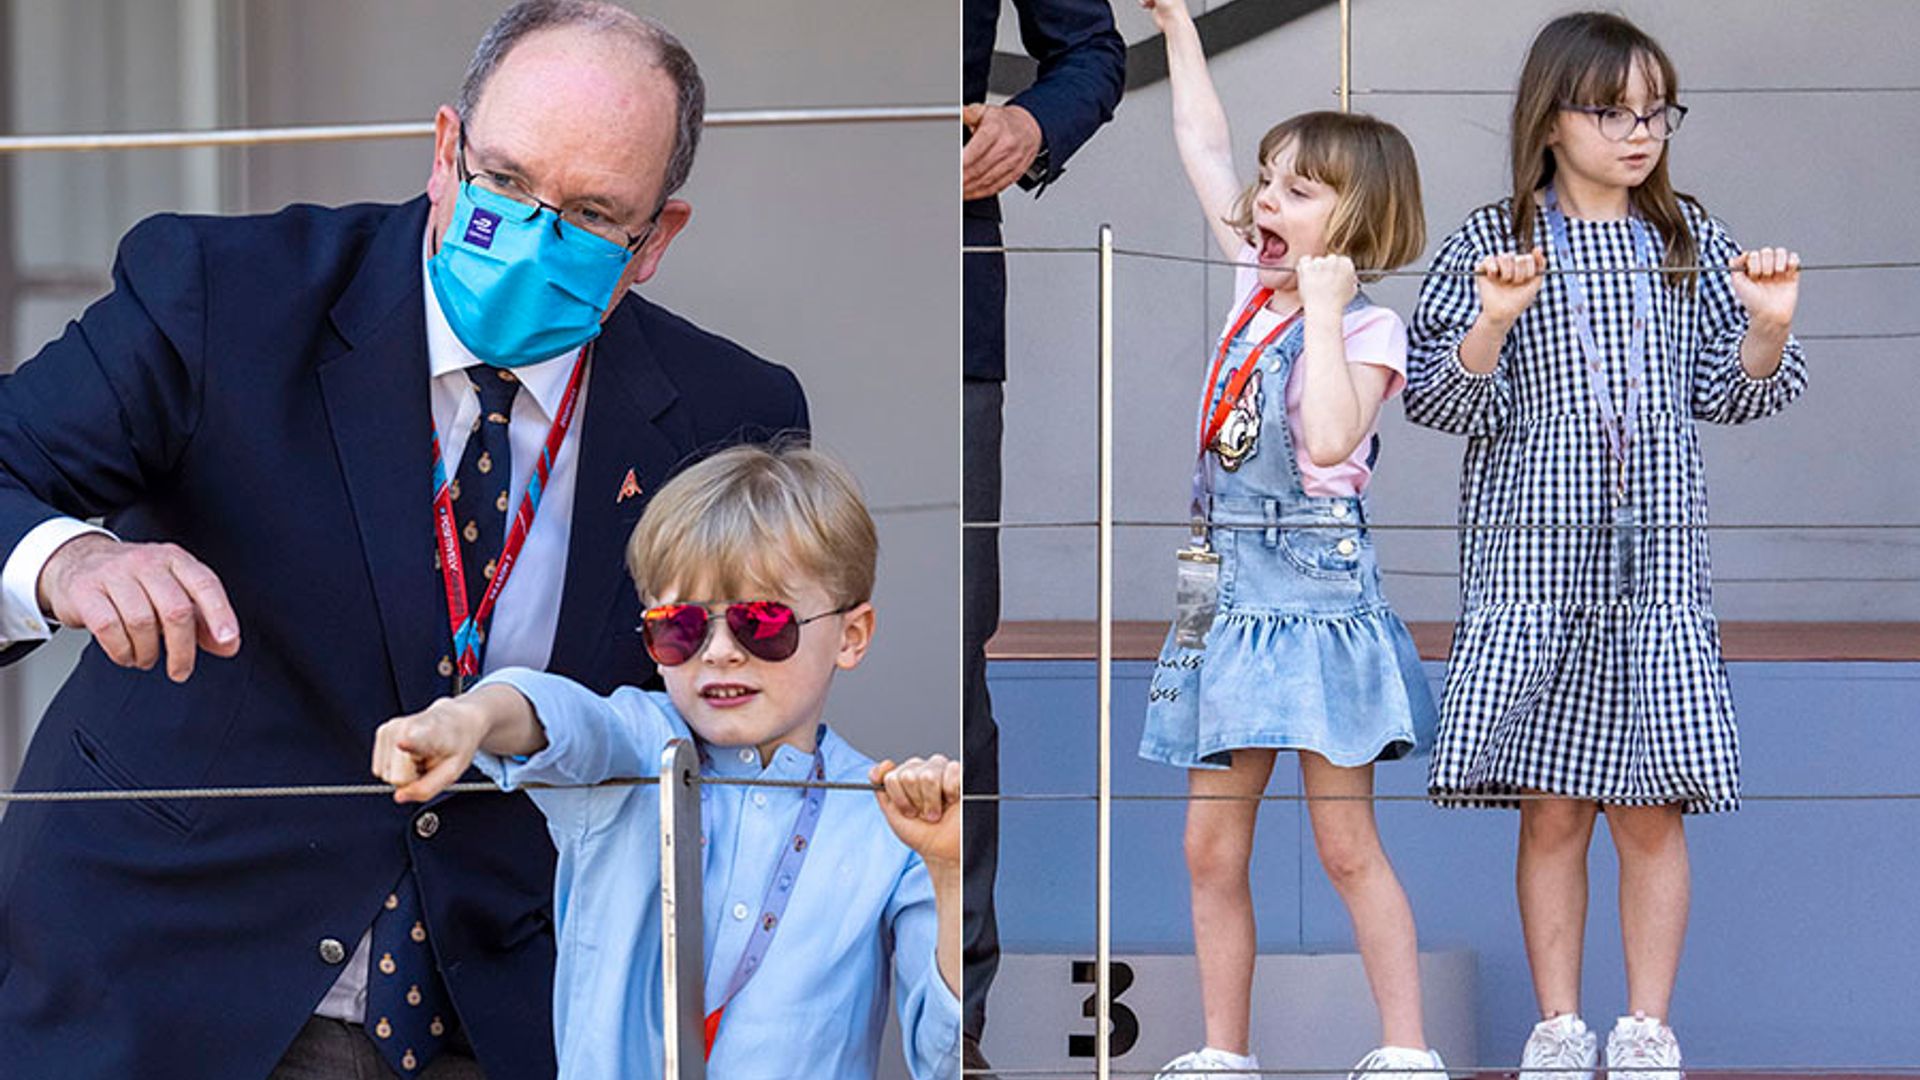 Monaco royal twins Prince Jacques and Princess Gabriella join dad Prince Albert at the ABB FIA Formula E Monaco E-Prix